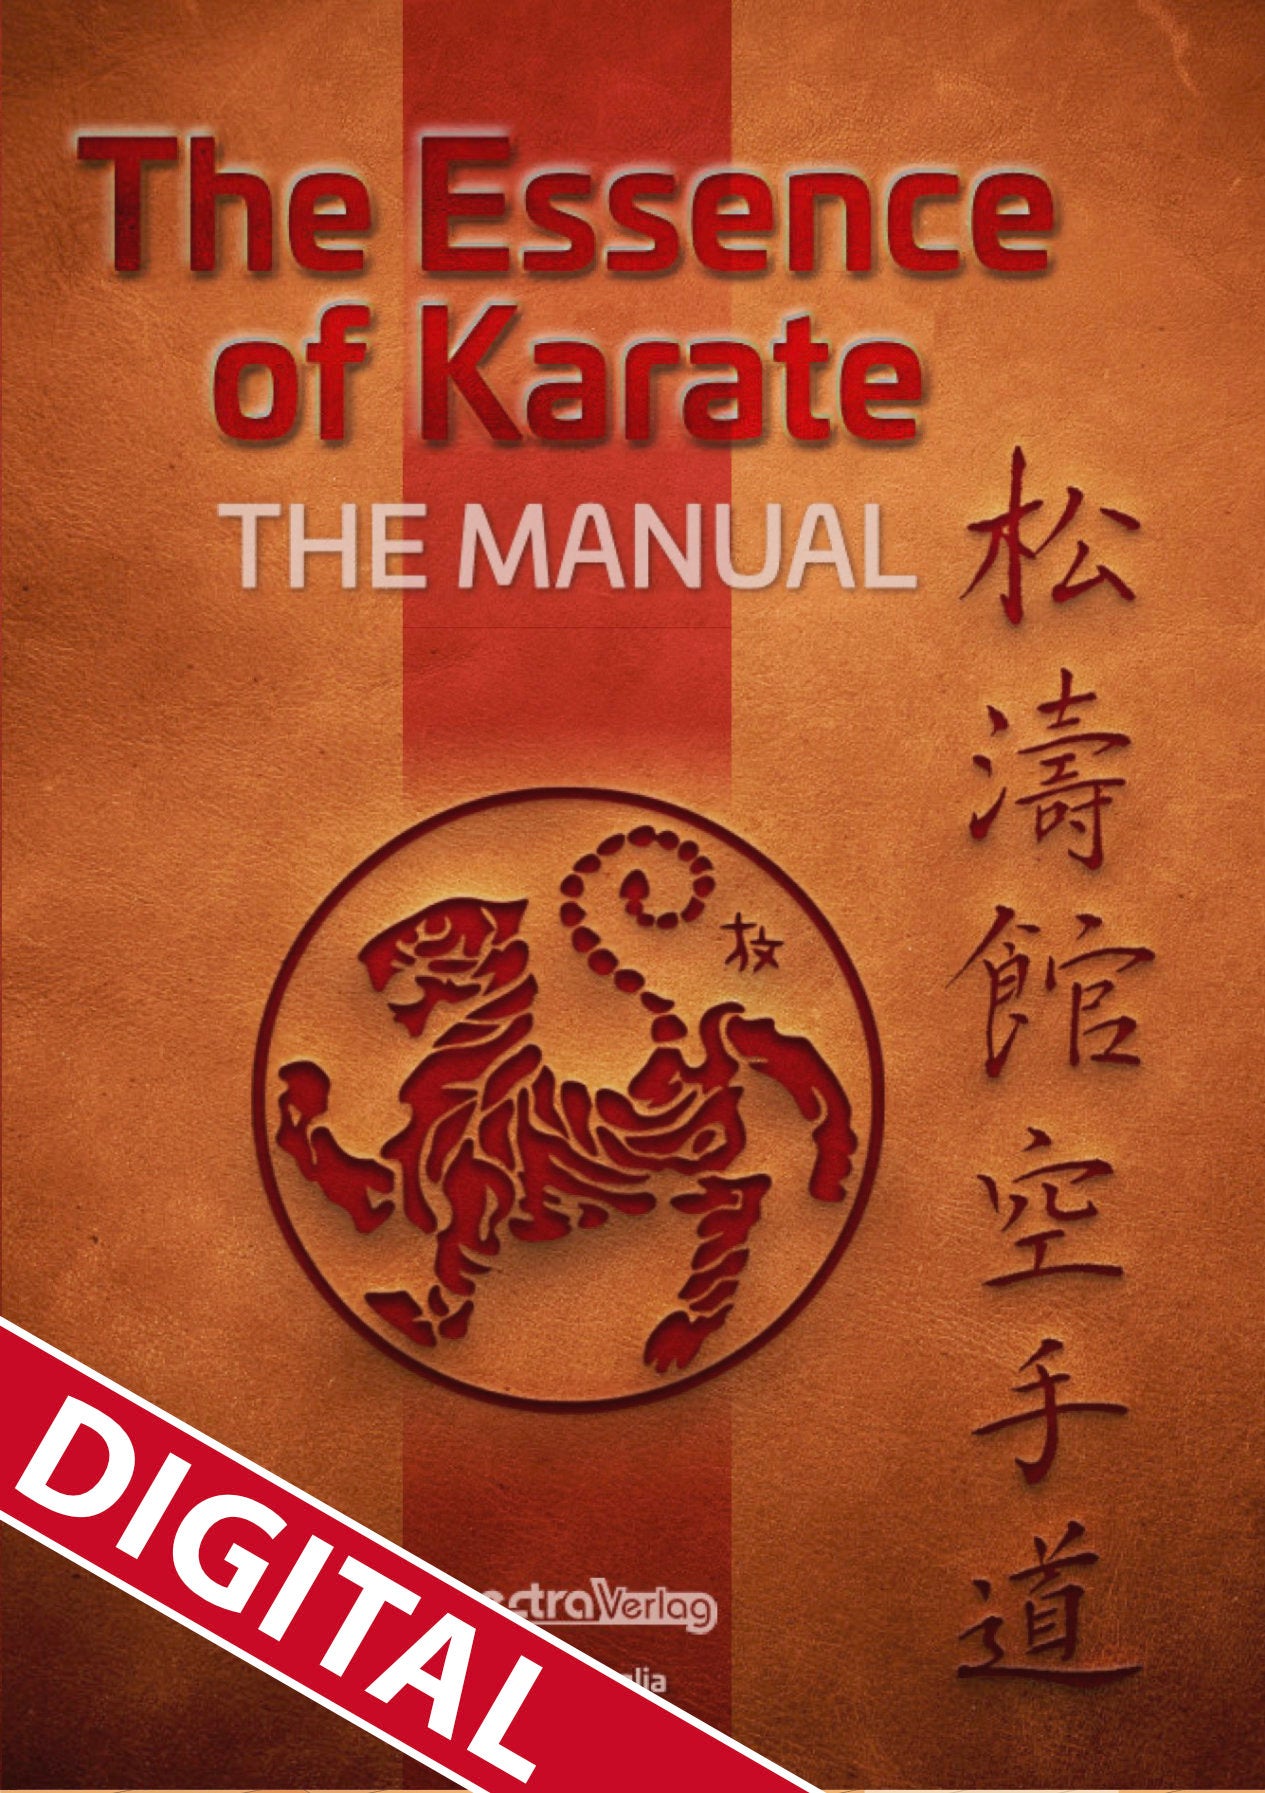 🇬🇧 Digital-Book | The Essence of Karate